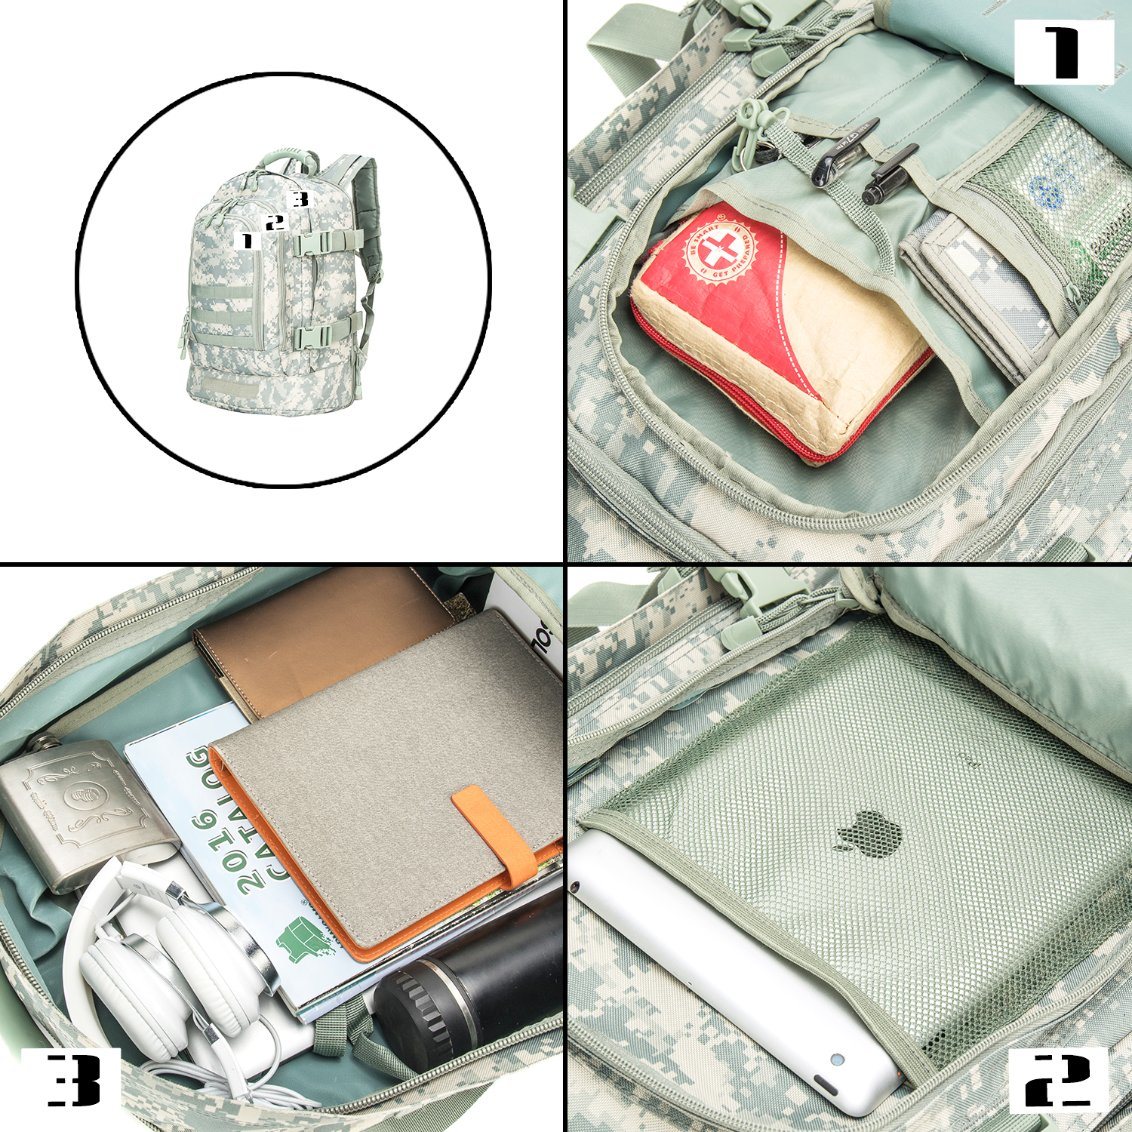 Polyster Tote Zipper Bag Air Soft Waterproof for Camping Hiking